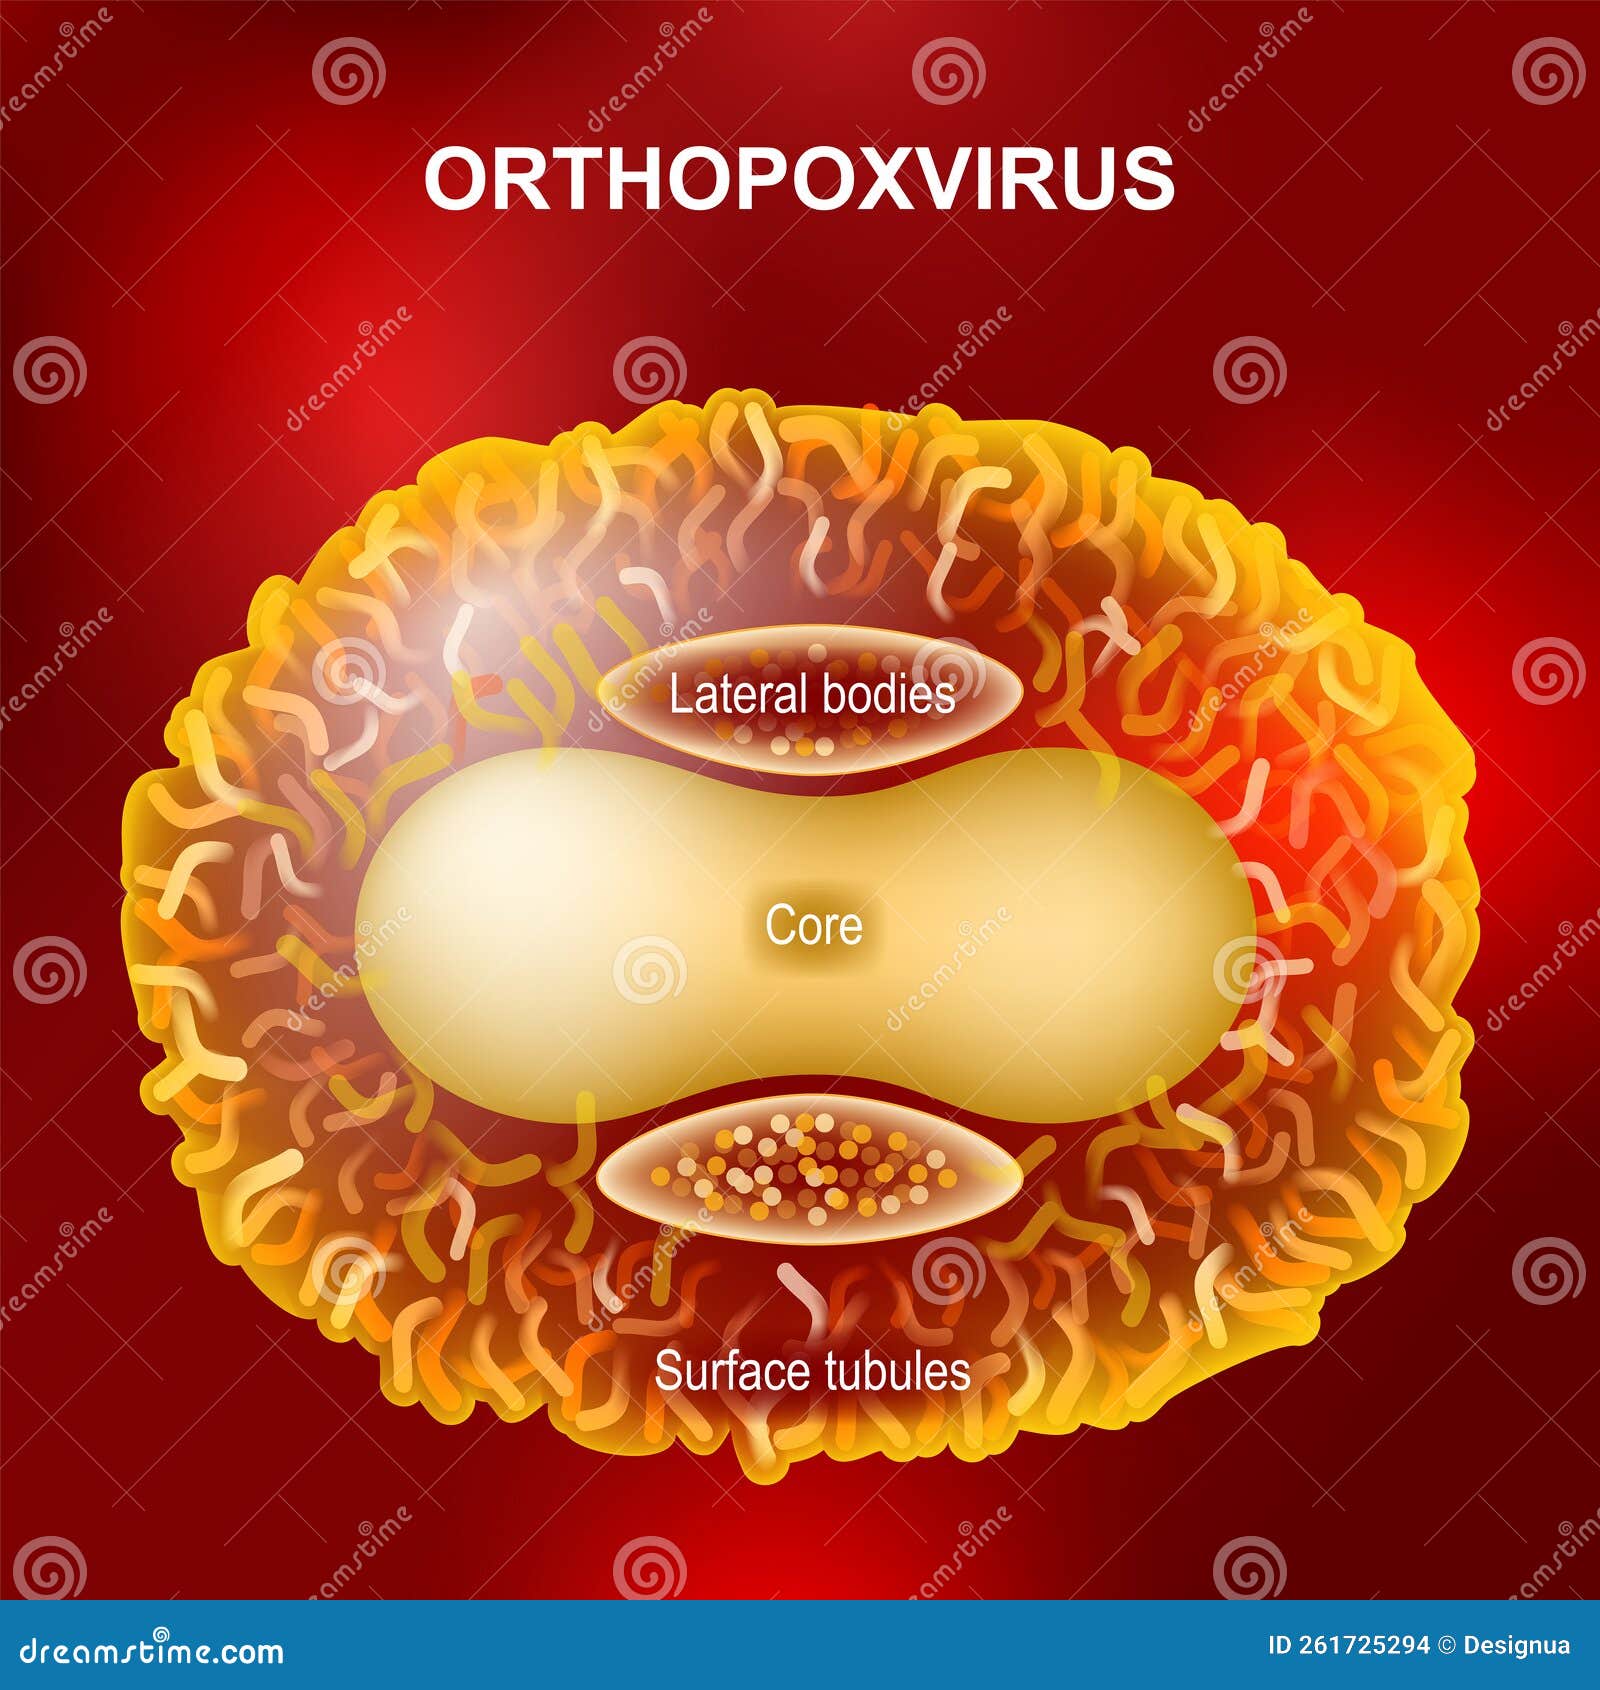 orthopoxvirus or monkeypox virus that cause smallpox, cowpox, horsepox, camelpox, and monkeypox